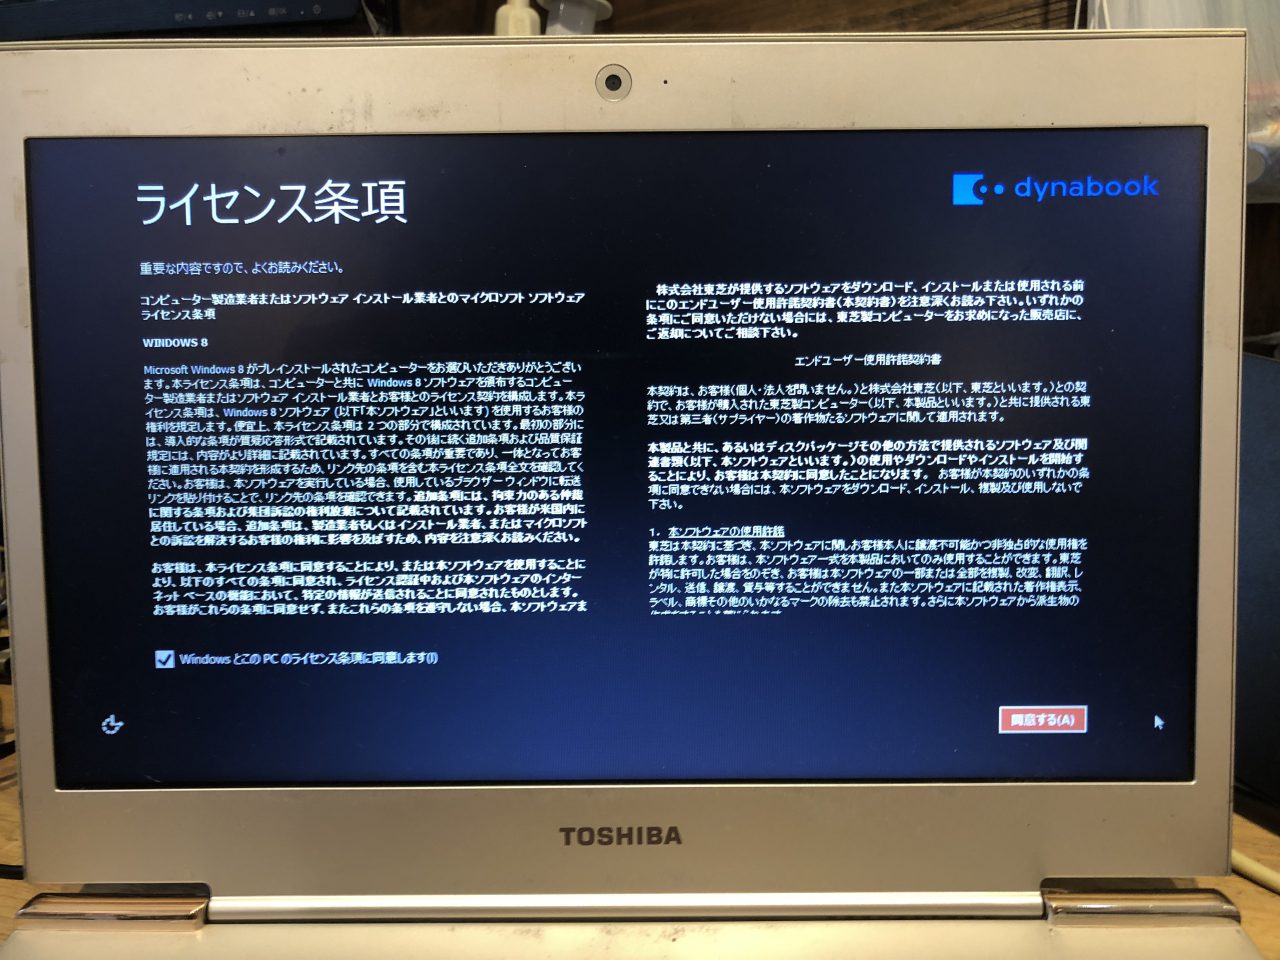 Tips Toshiba Dynabook R632 28gk Windows 8 マシン を 10にリカバリー